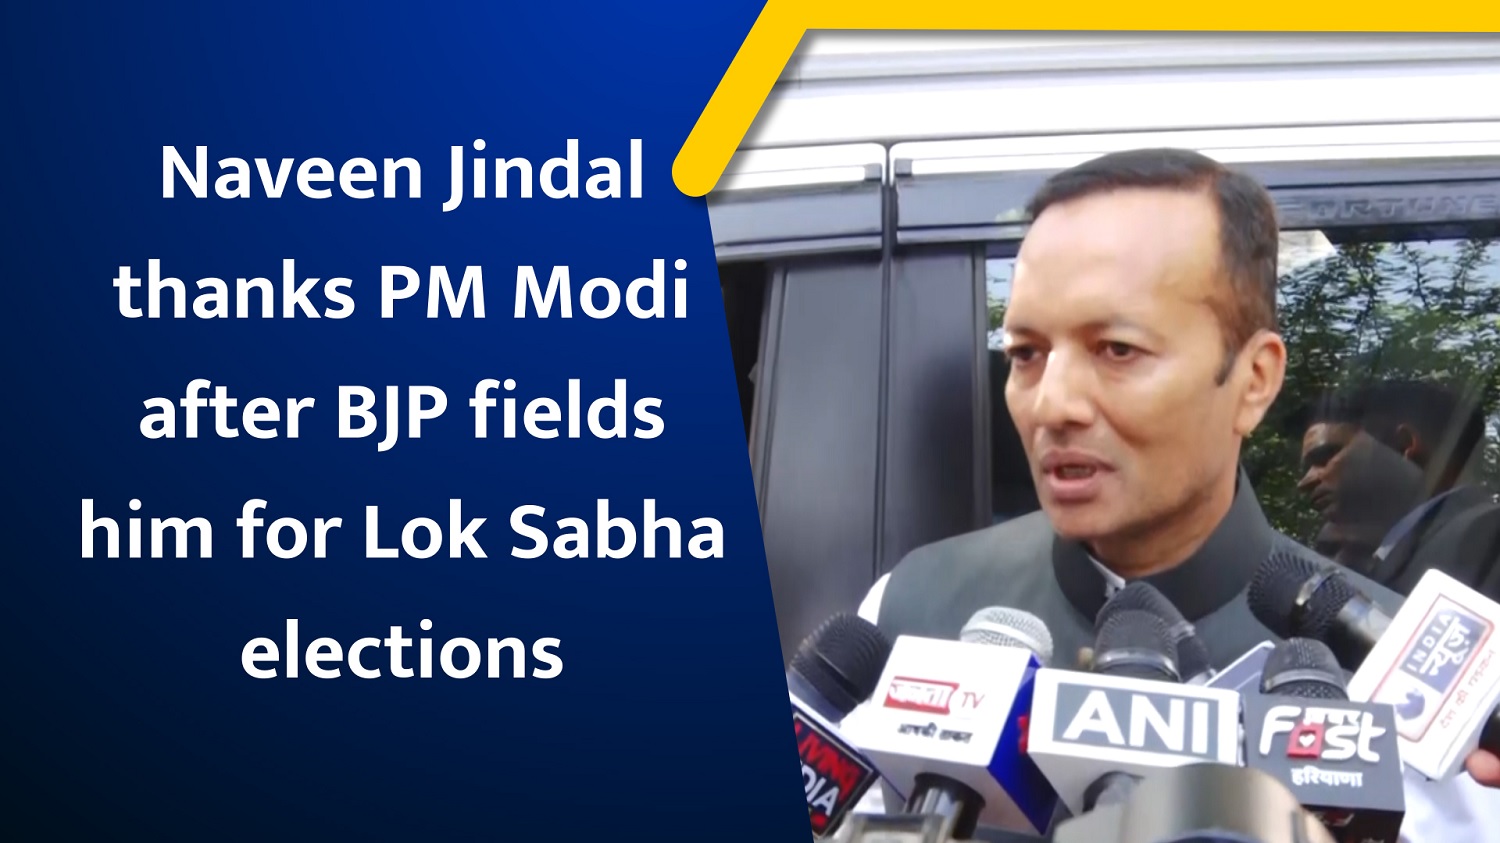 Naveen Jindal thanks PM Narendra Modi after BJP fields him for Lok Sabha elections